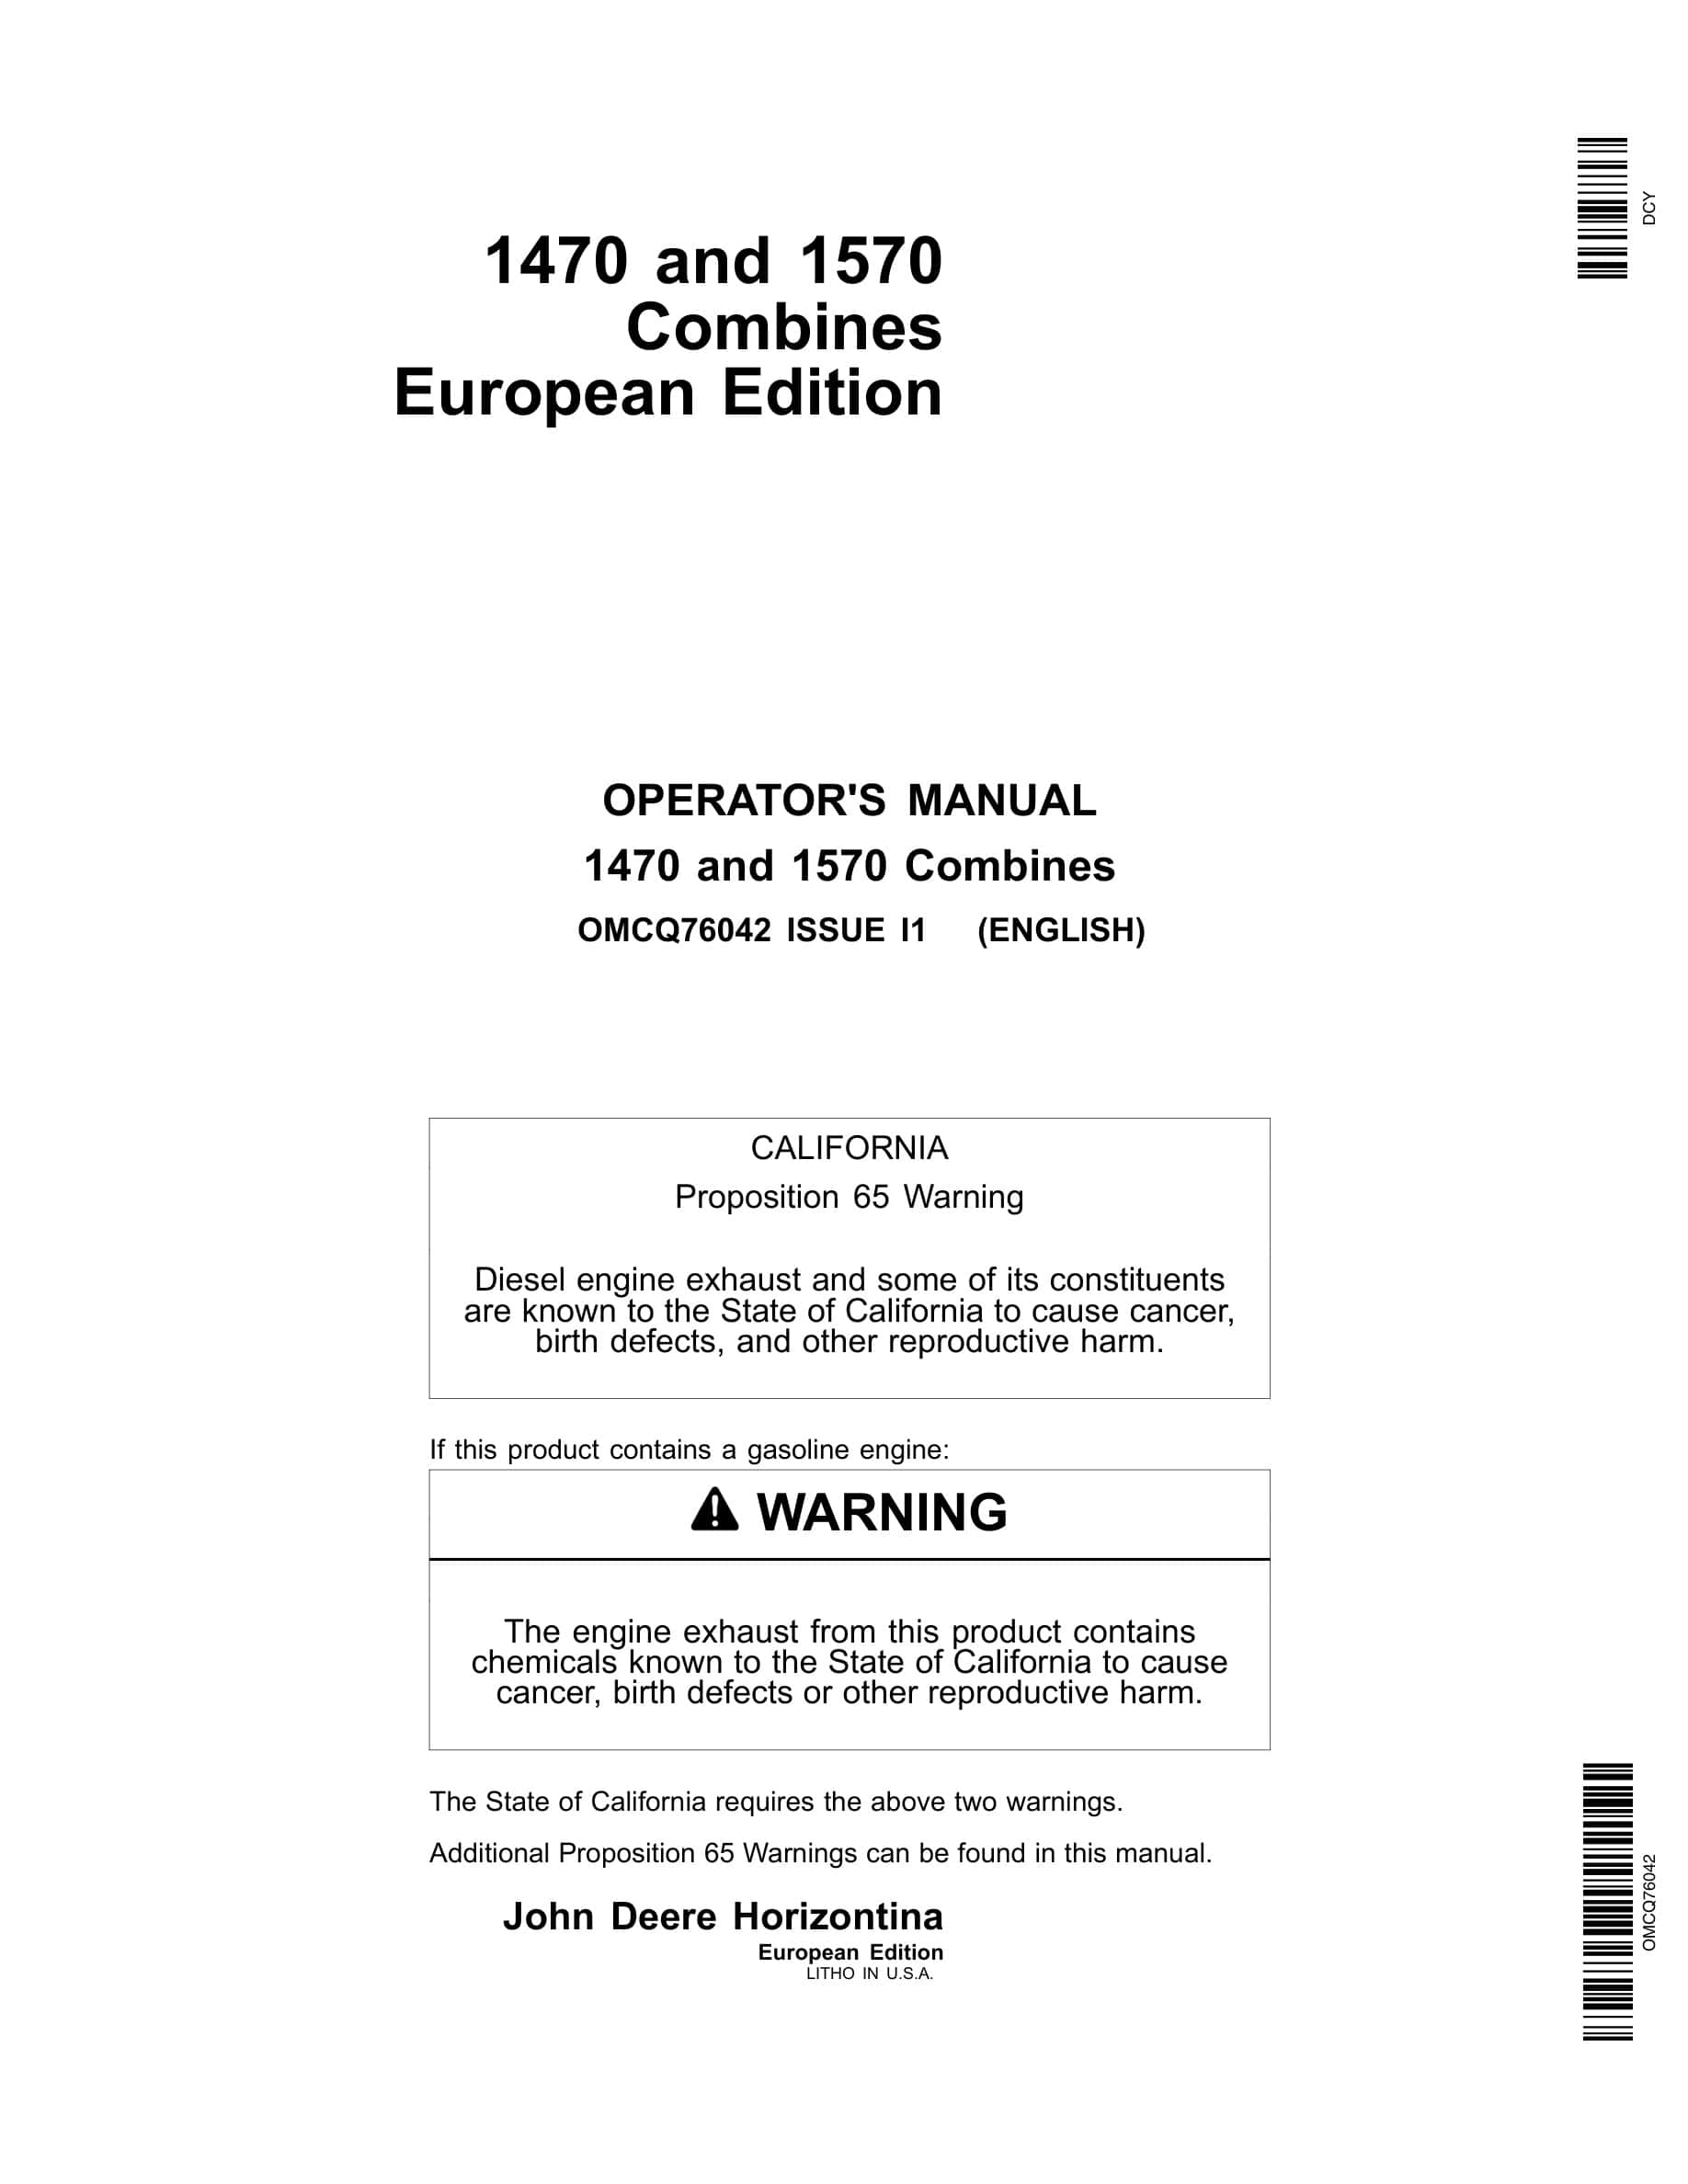 John Deere 1470 and 1570 Combine Operator Manual OMCQ76042-1